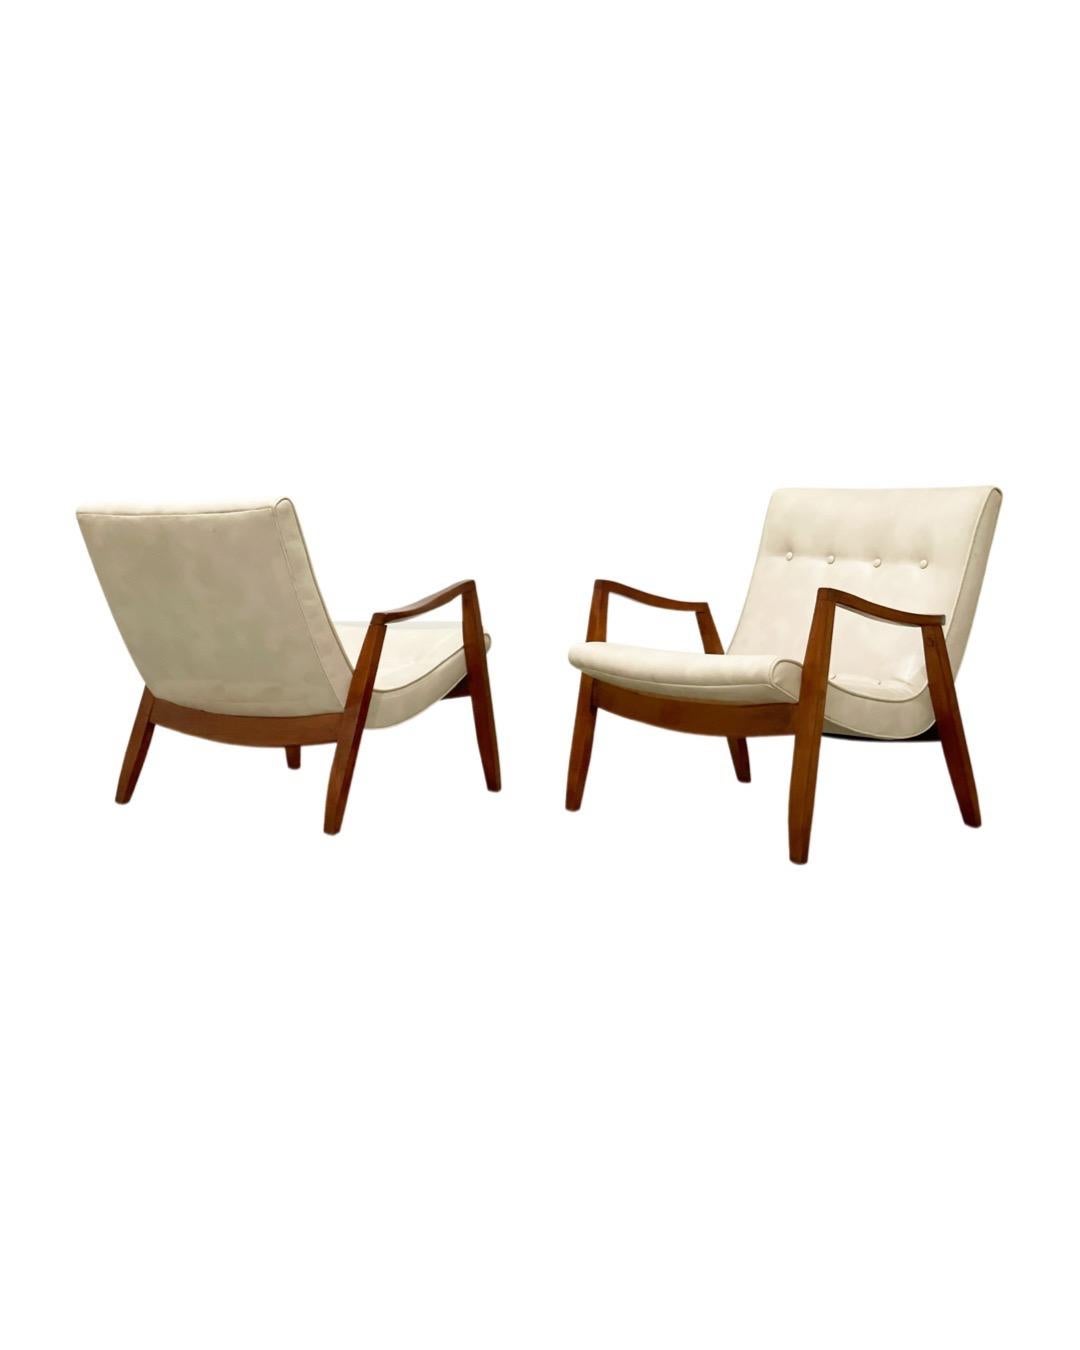 Naugahyde Midcentury Pair Milo Baughman Scoop Lounge Chairs for James Inc, Circa 1953